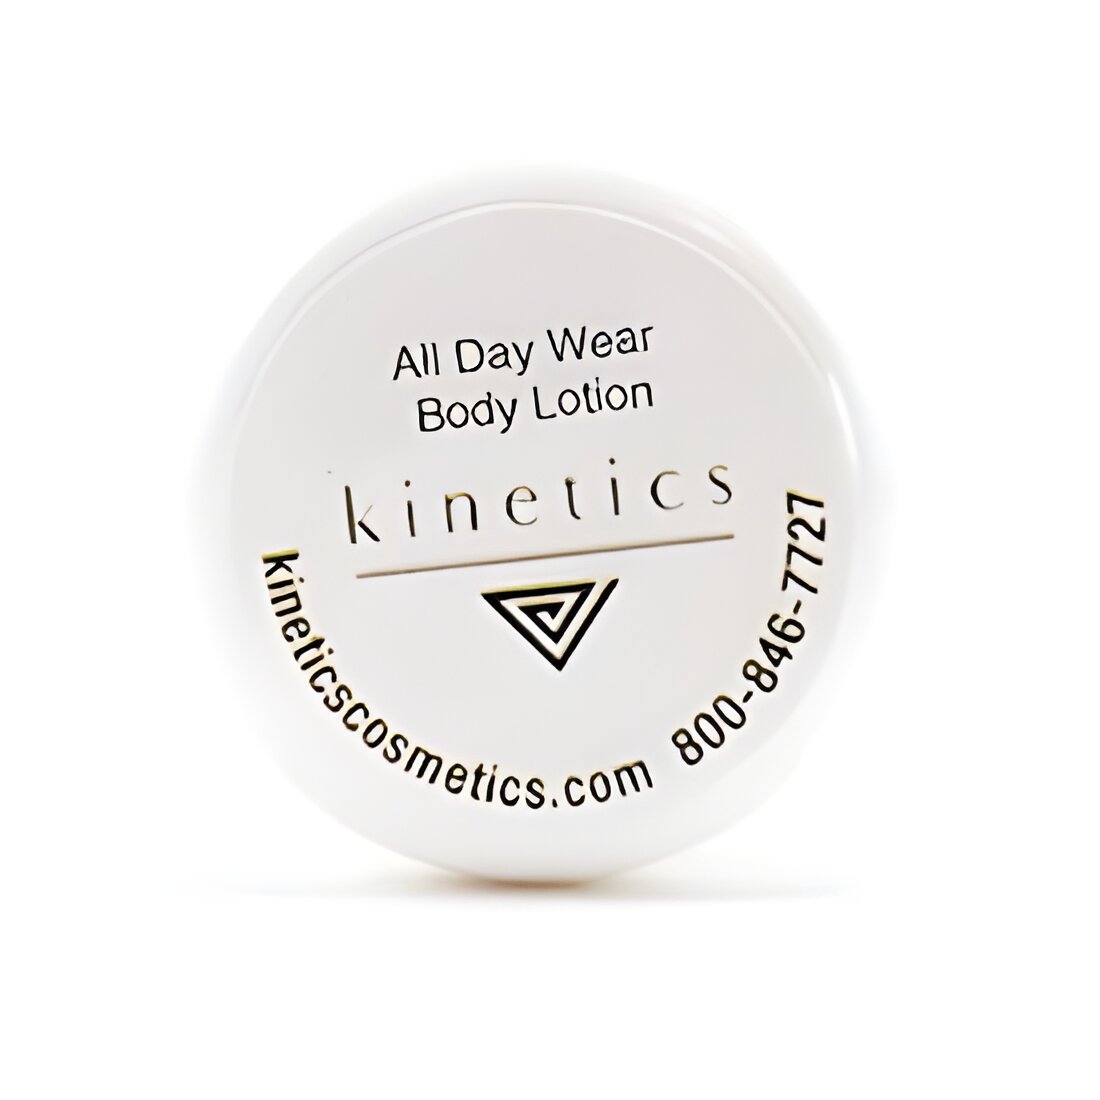 Free Kinetics Cosmetics All Day Wear Body Lotion Sample